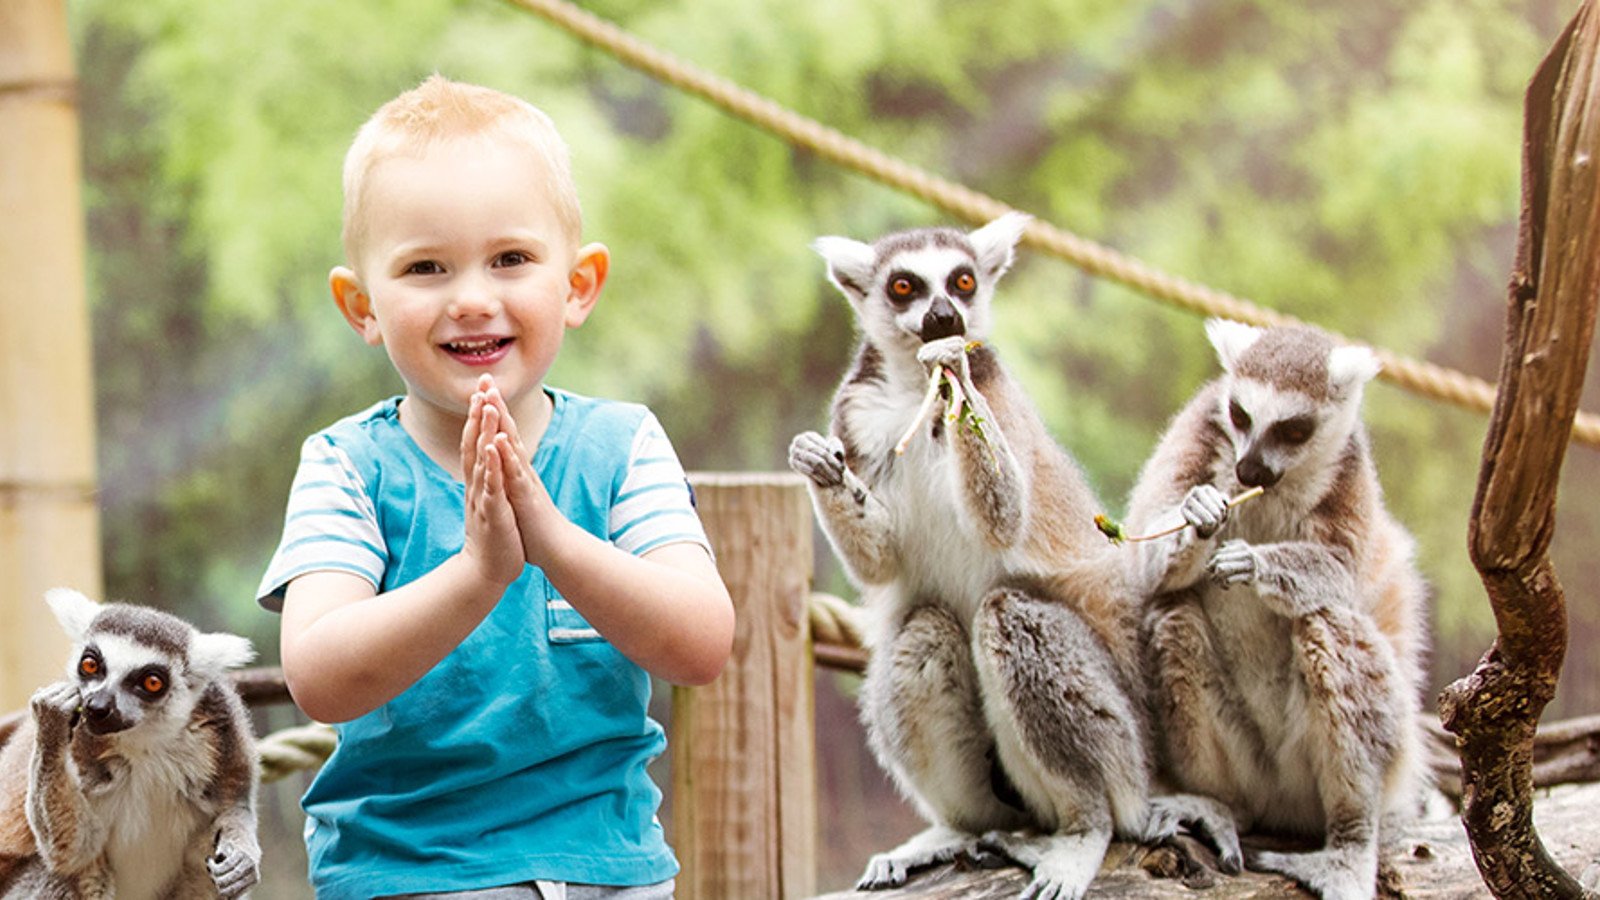 A happy kid next to some monkeys